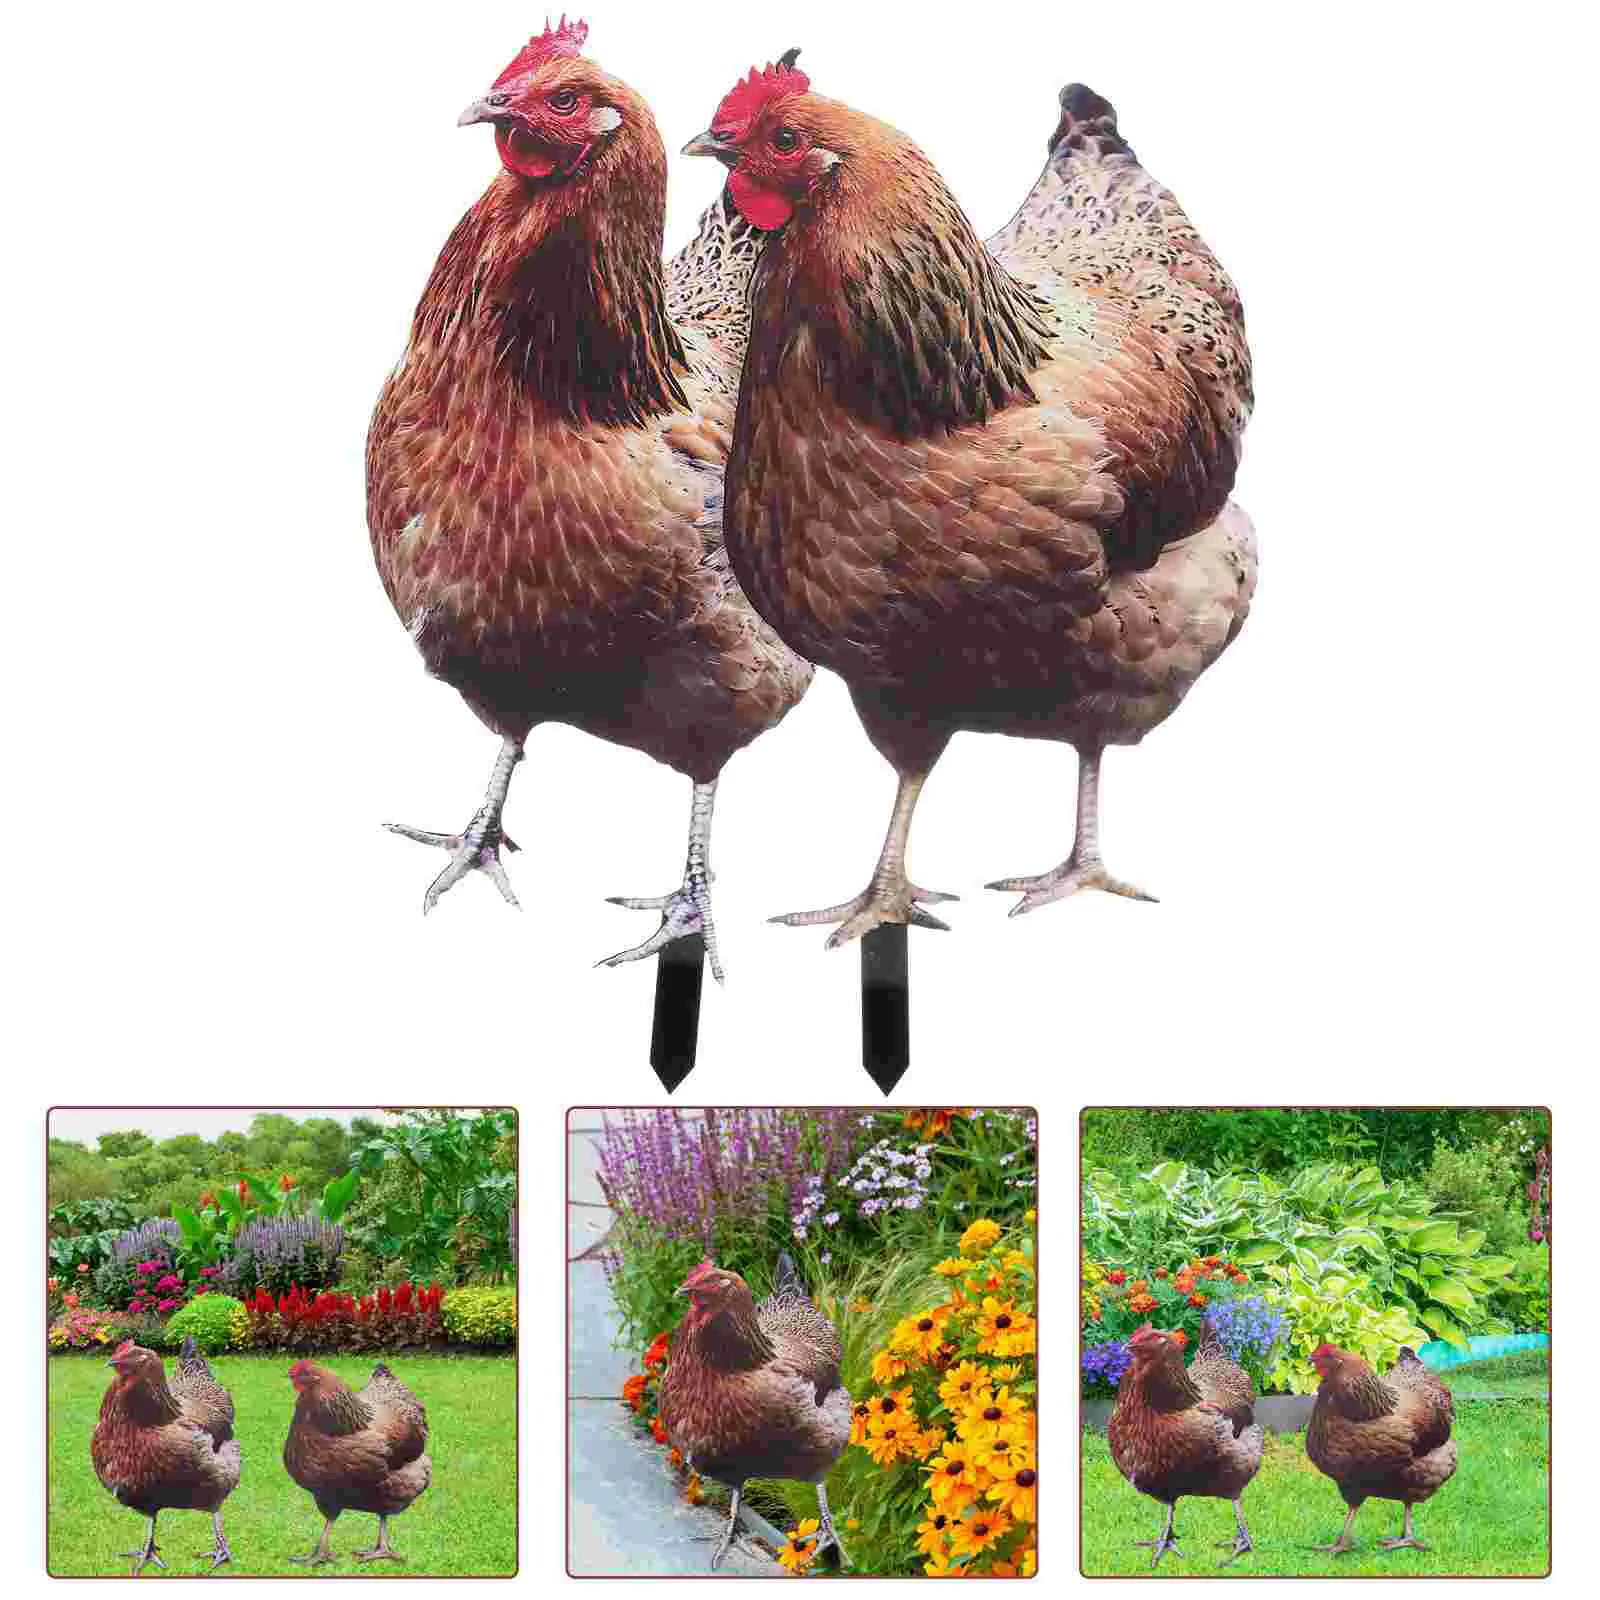 

Model Garden Accessory Chicken Yard Sign Yards Stake Decoration Adornment Ornament Animal Insert Lawn Decorative House